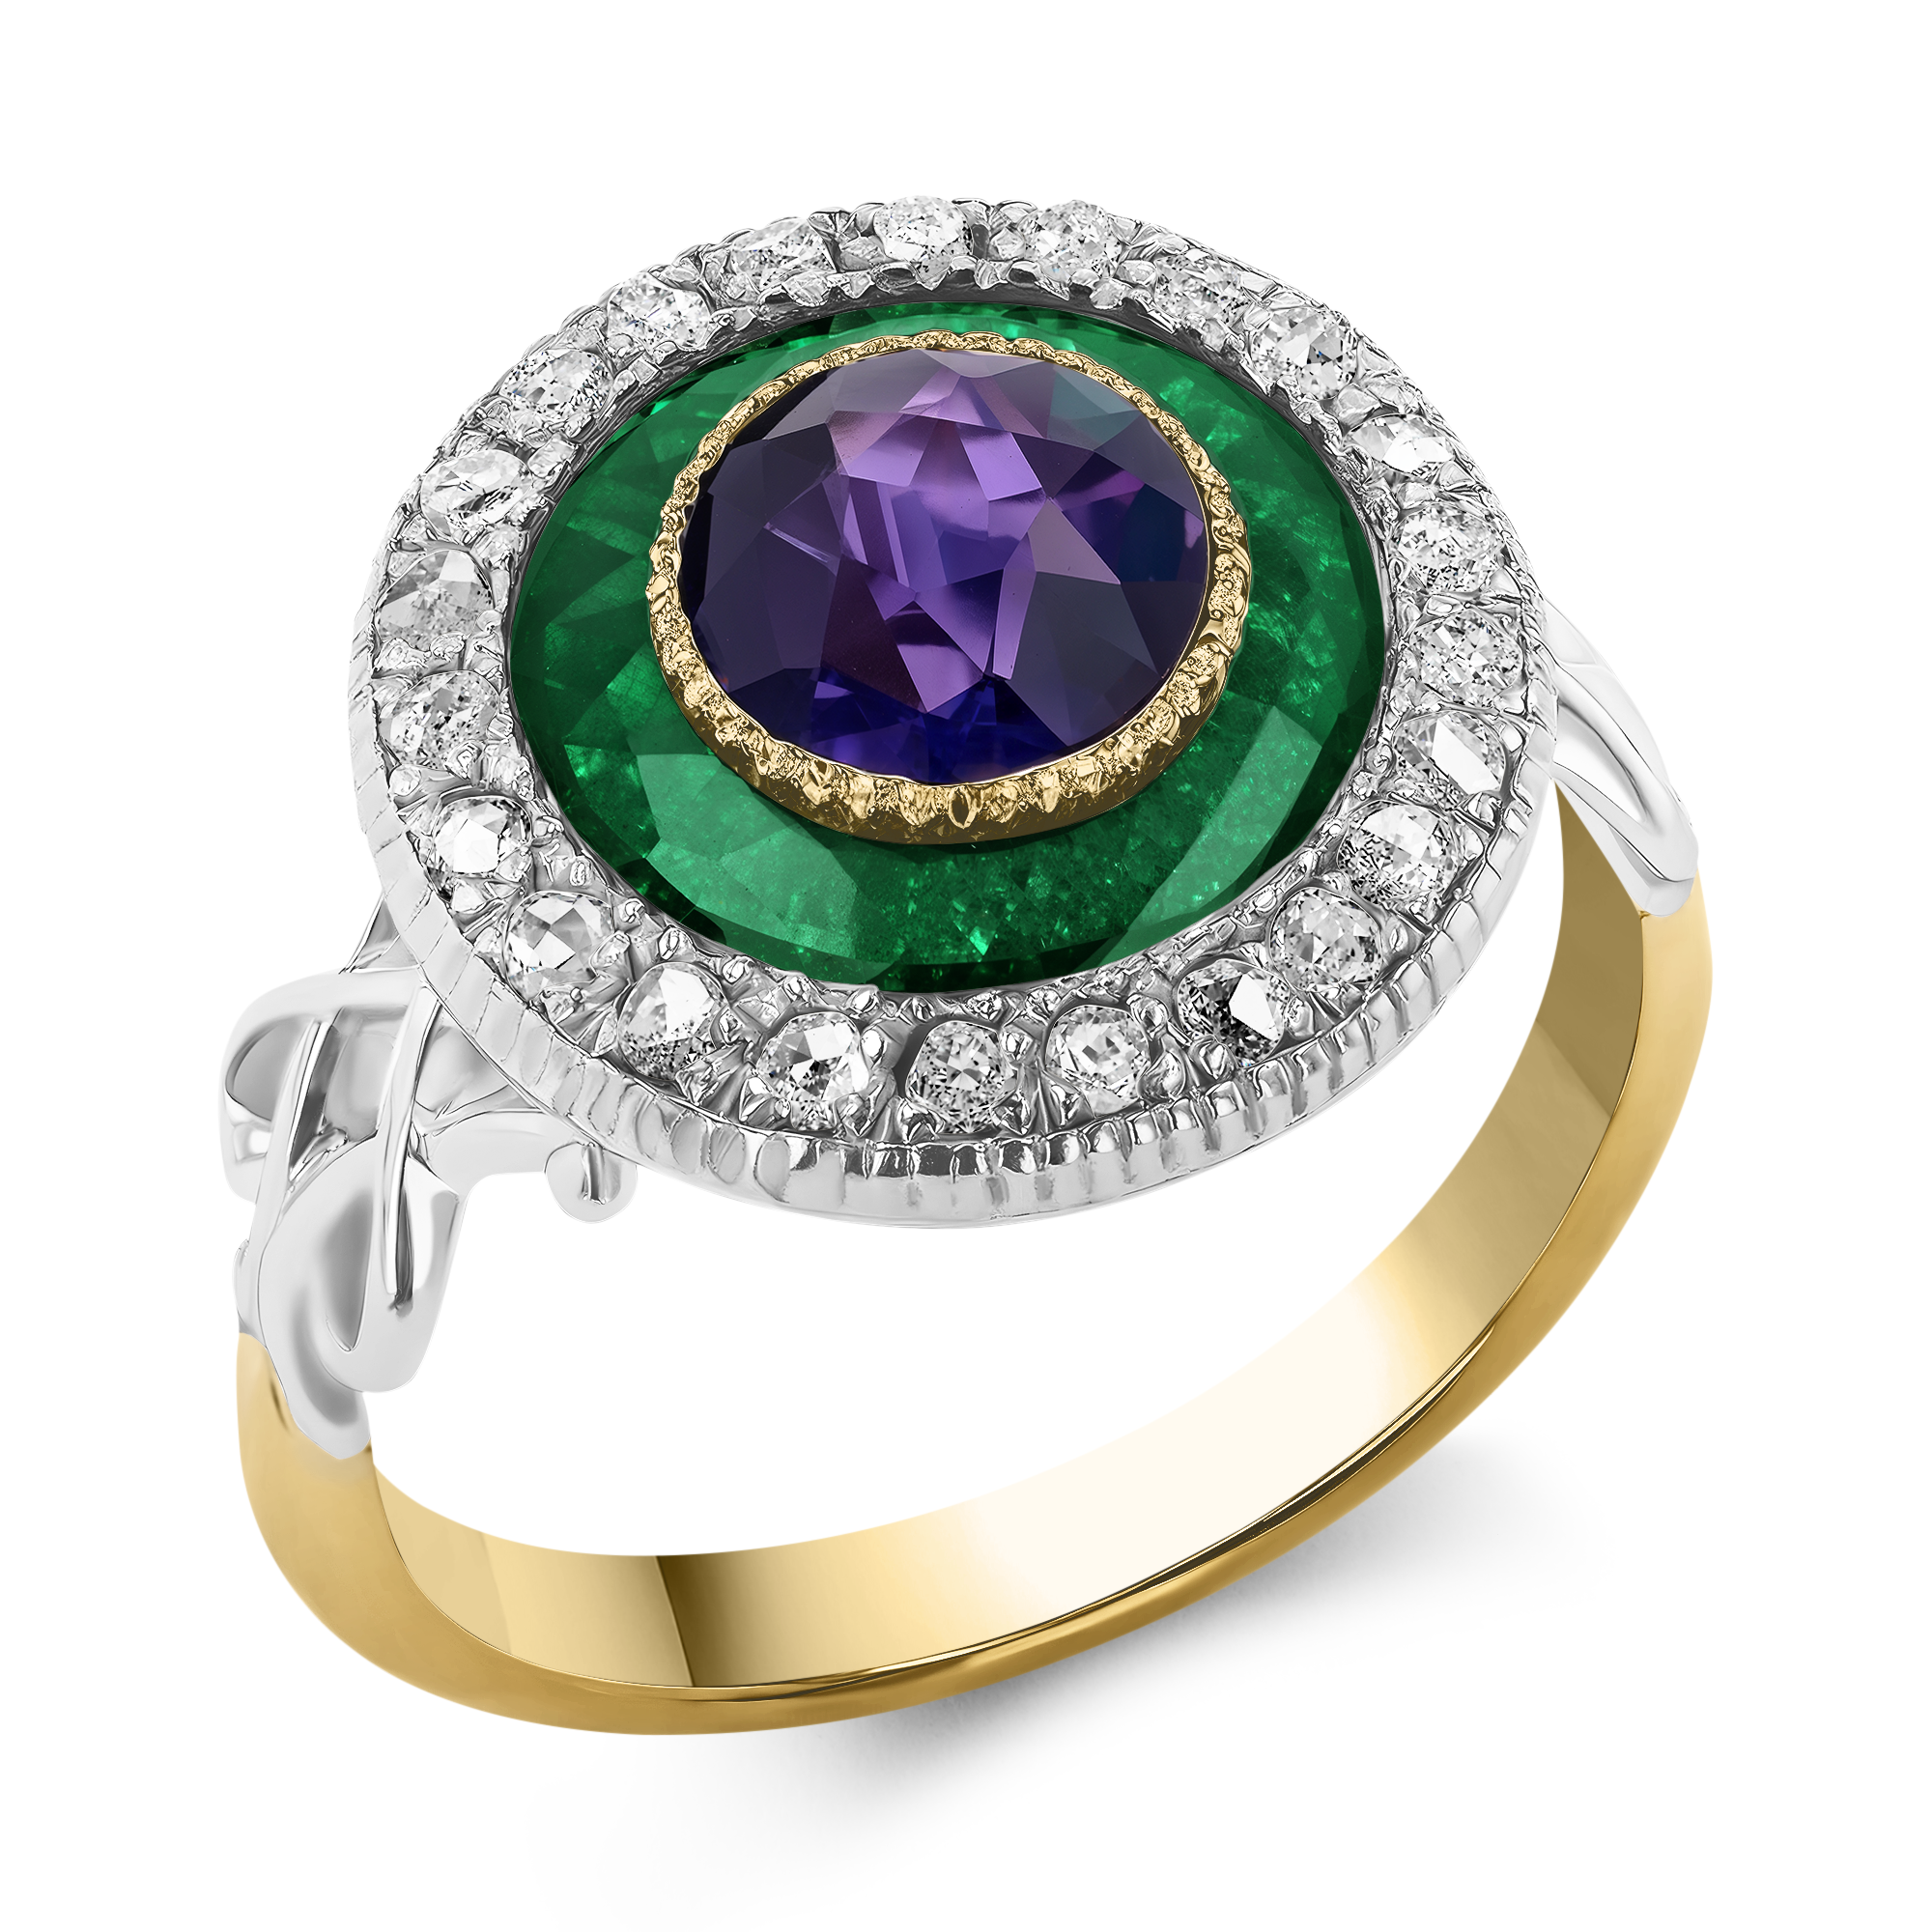 Edwardian Suffragette Amethyst, Diamond and Enamel Cocktail Ring Brilliant Cut, Millegrain Set_1